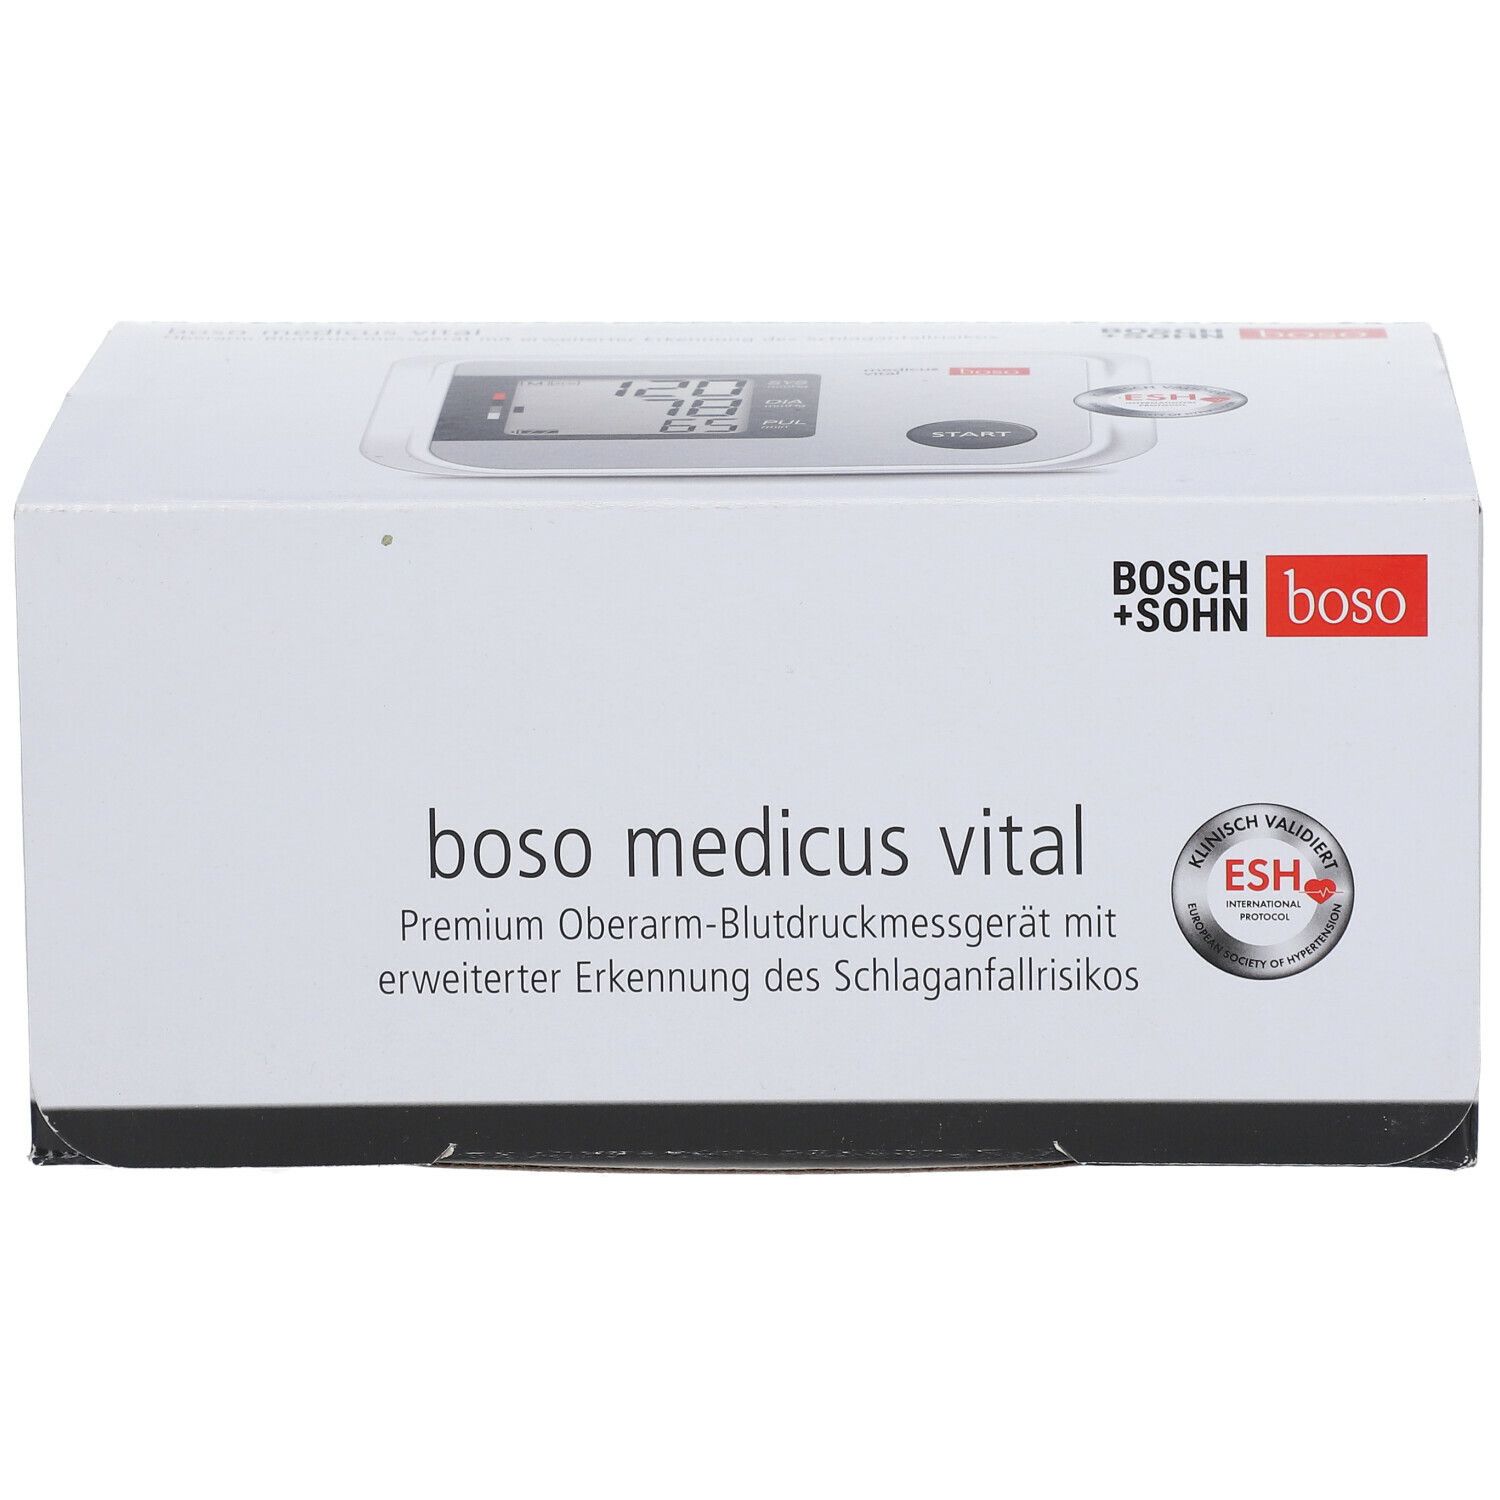 boso medicus vital Blutdruckmessgerät